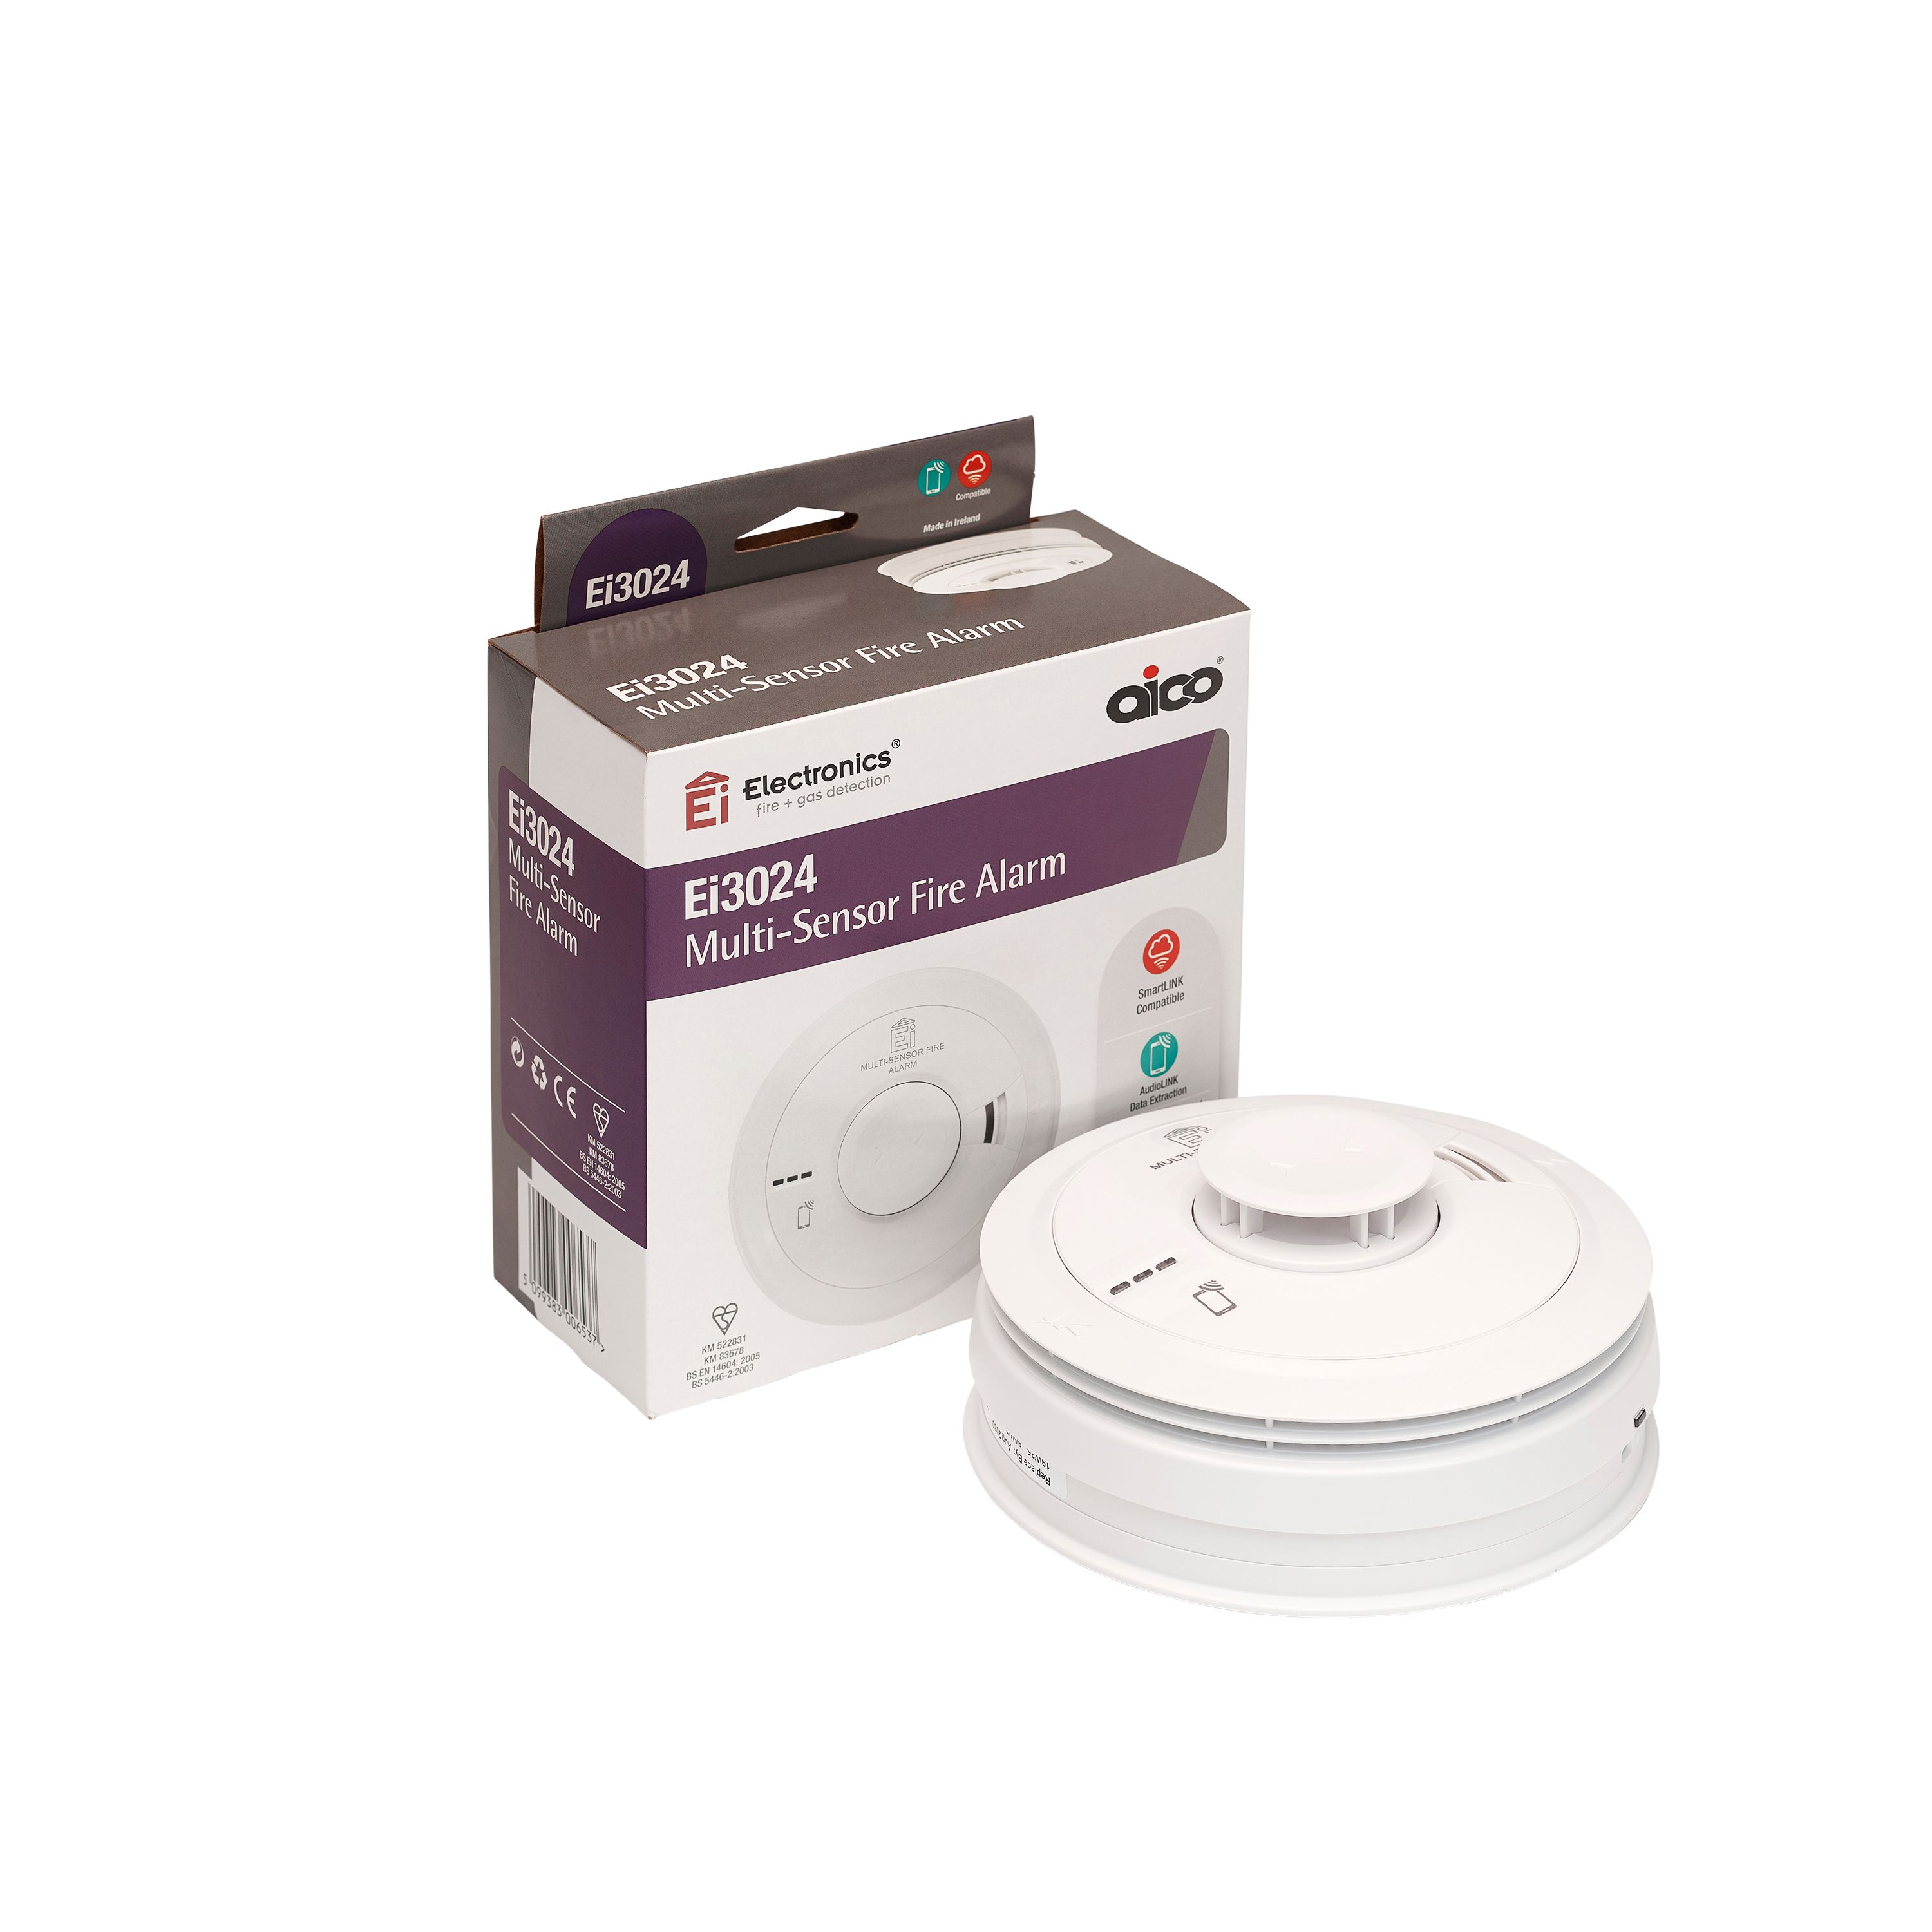 Aico EI3024 Multi-sensor Fire Alarm Detector for sale online 